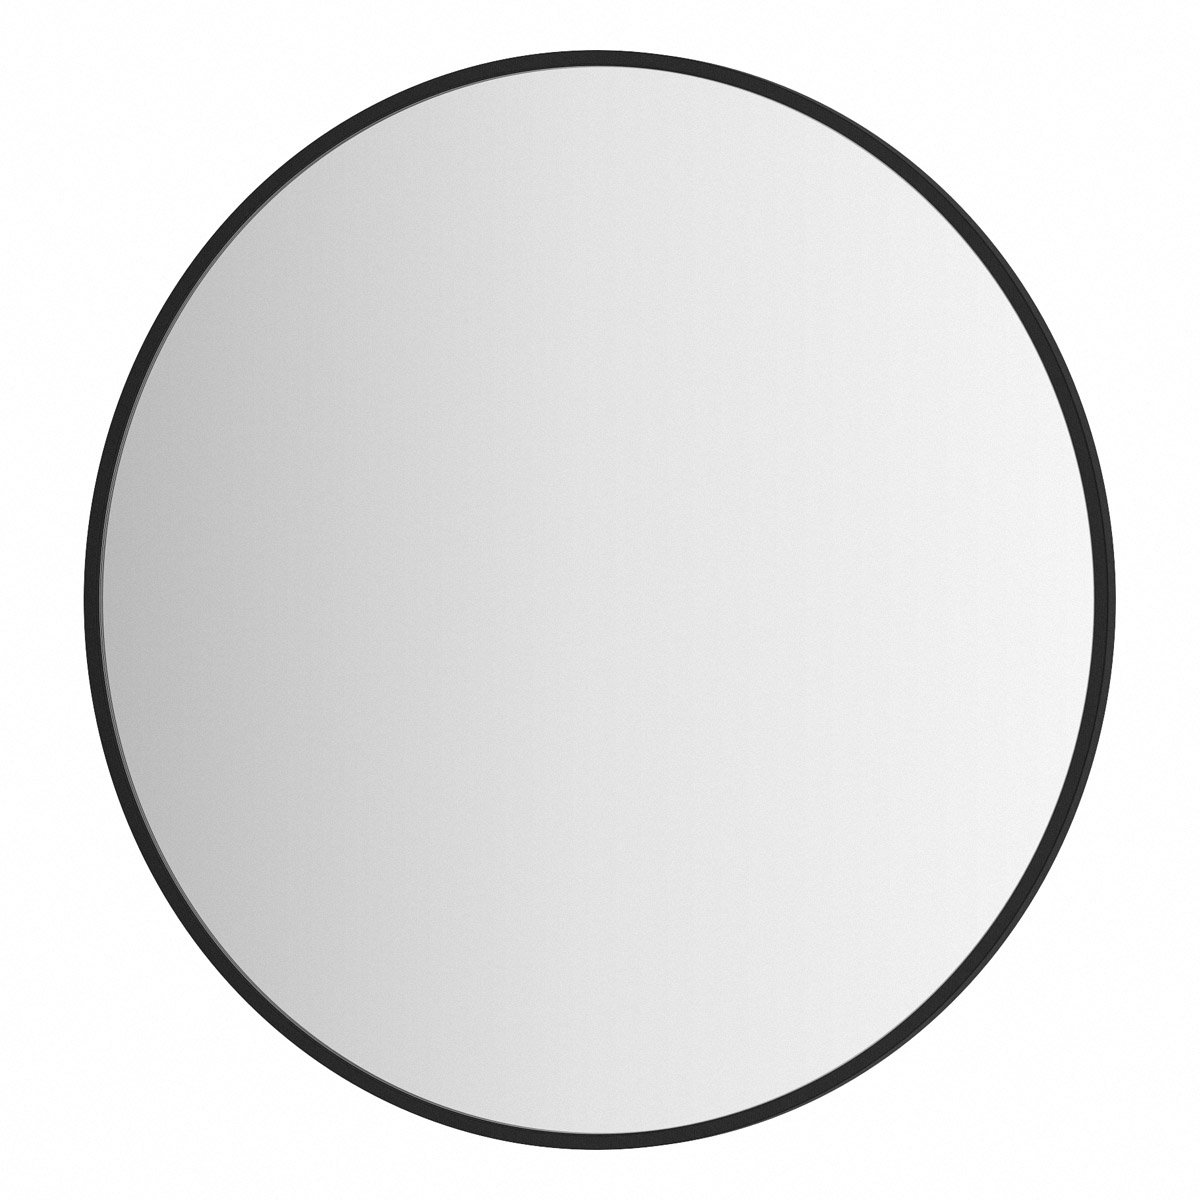 Зеркало Evoform Impressive BY 7543 60, черное